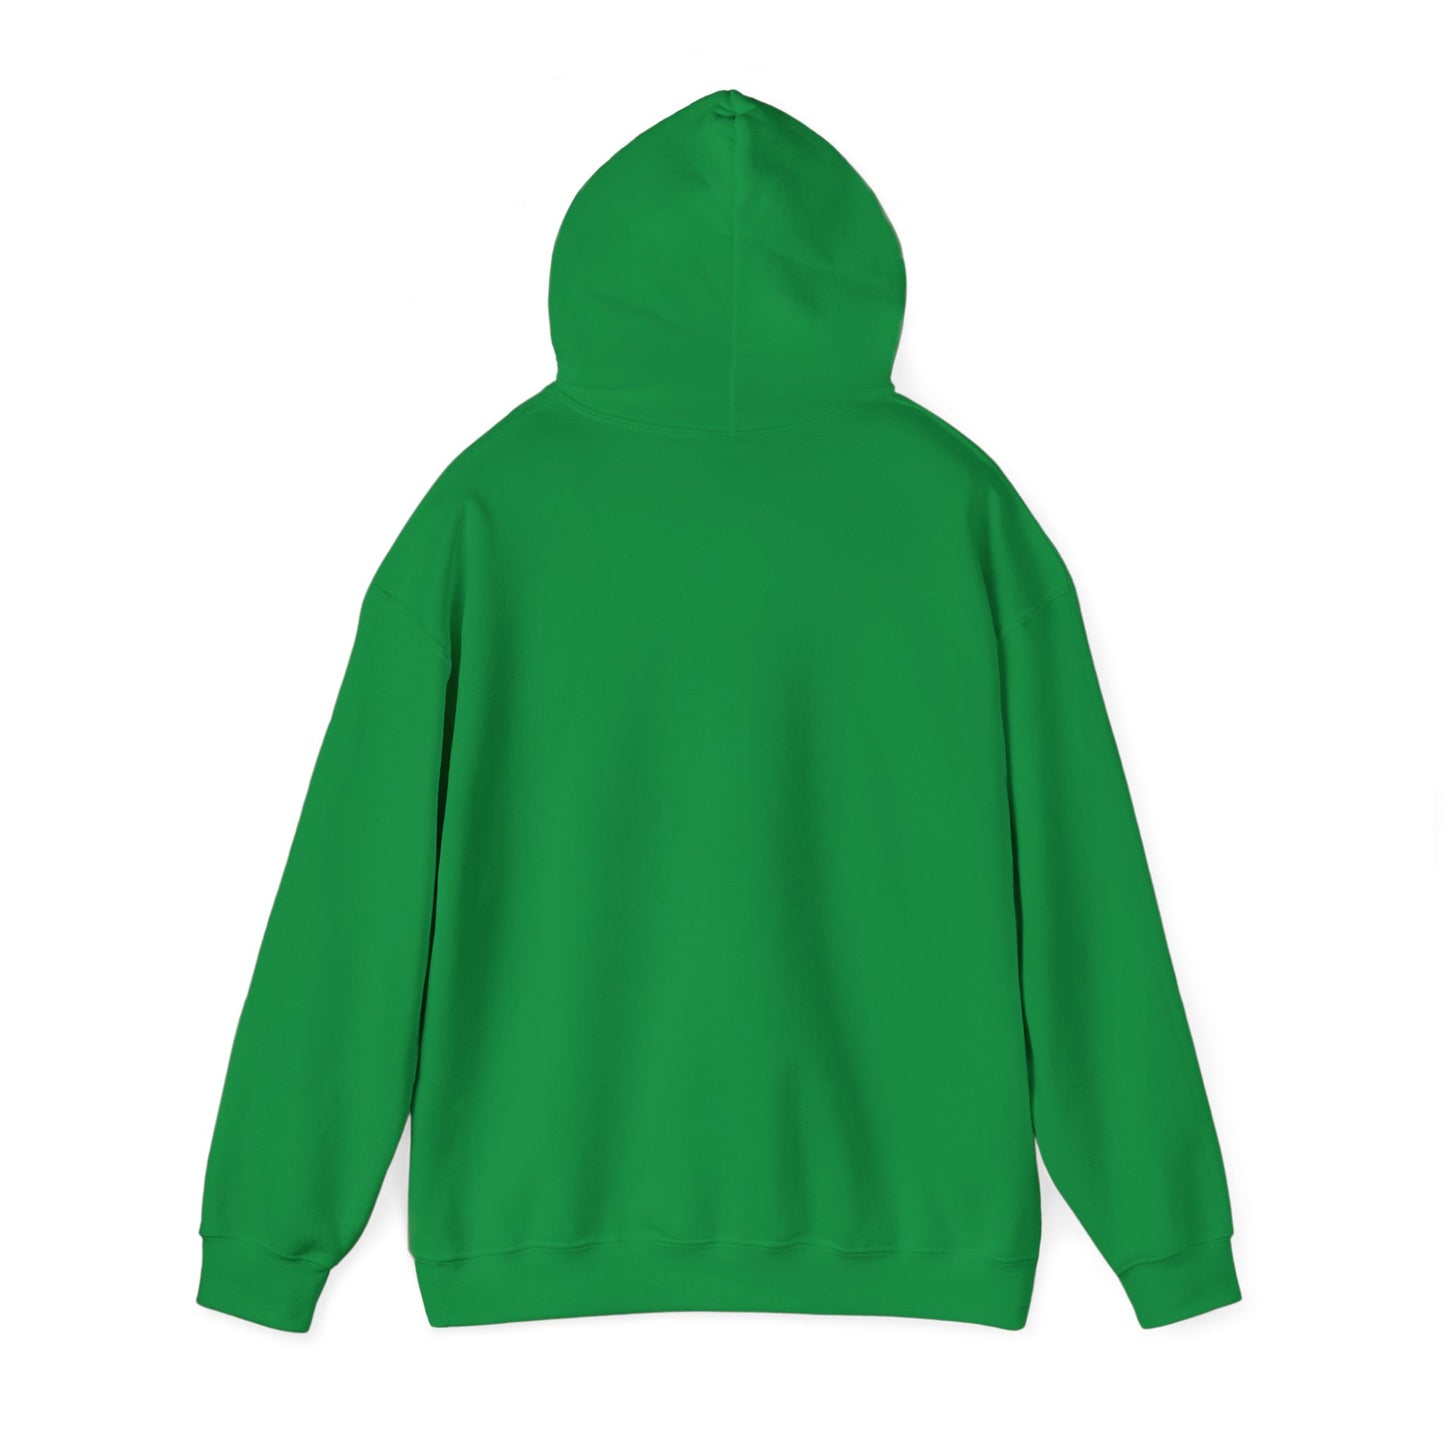 Best Son Hooded Sweatshirt, Bogan's Design